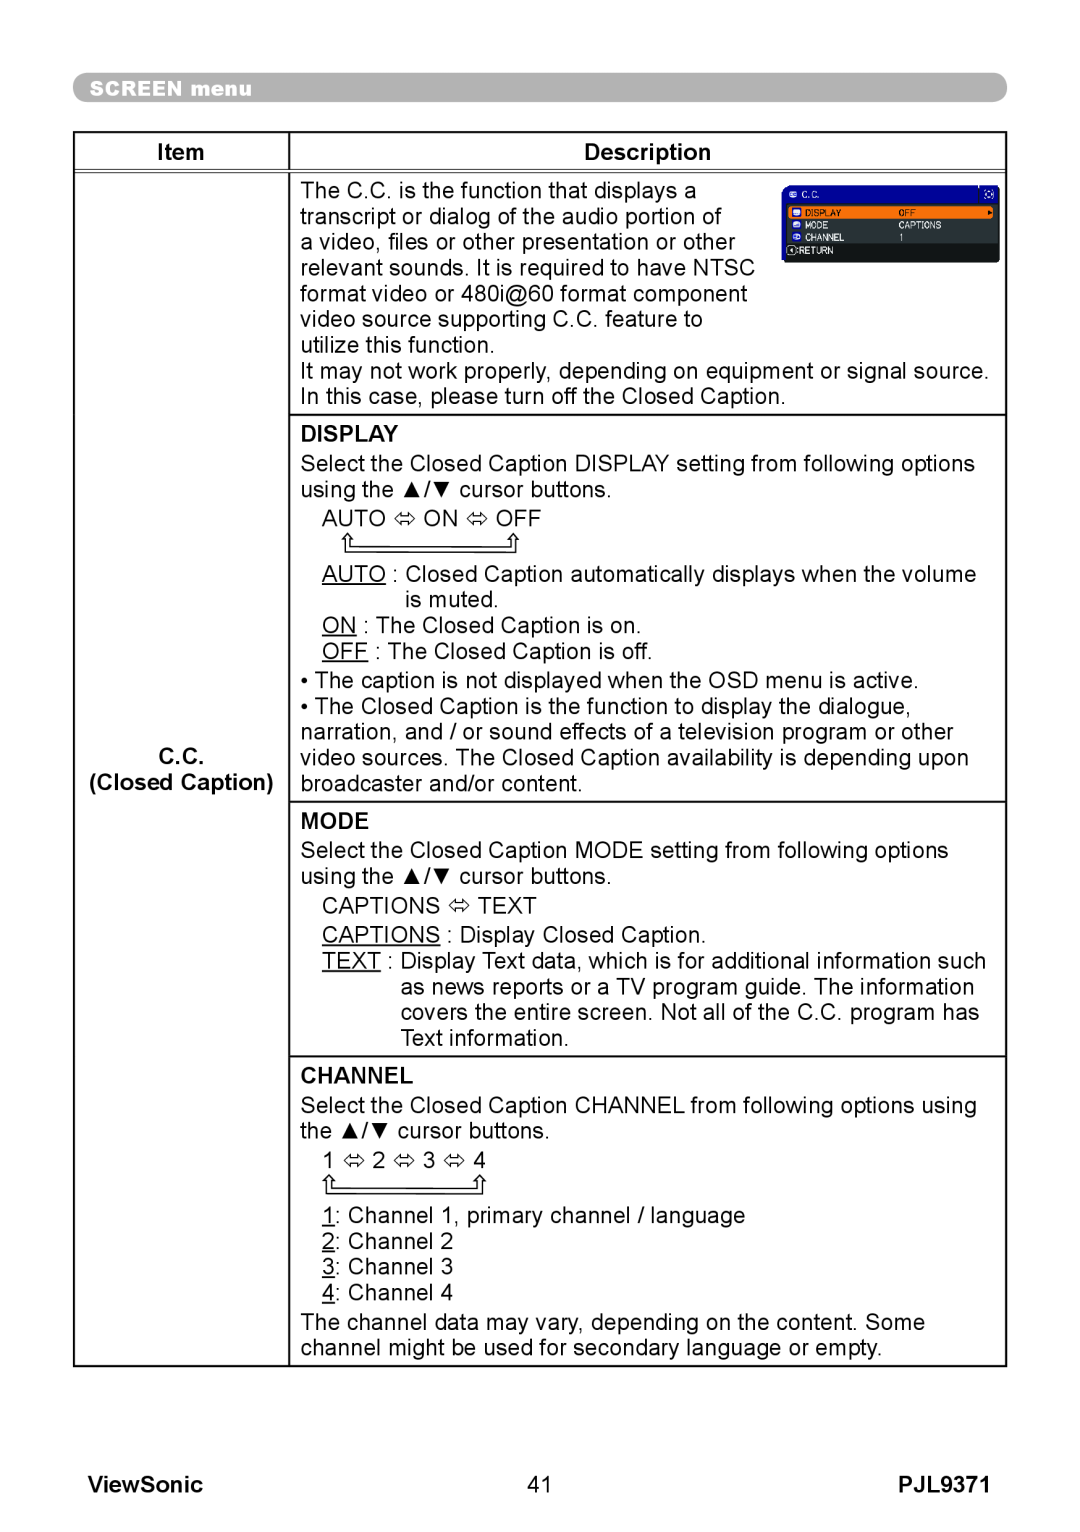 ViewSonic pjl9371 manual Description, C.C Closed Caption, Display, Mode, Channel, ViewSonic 